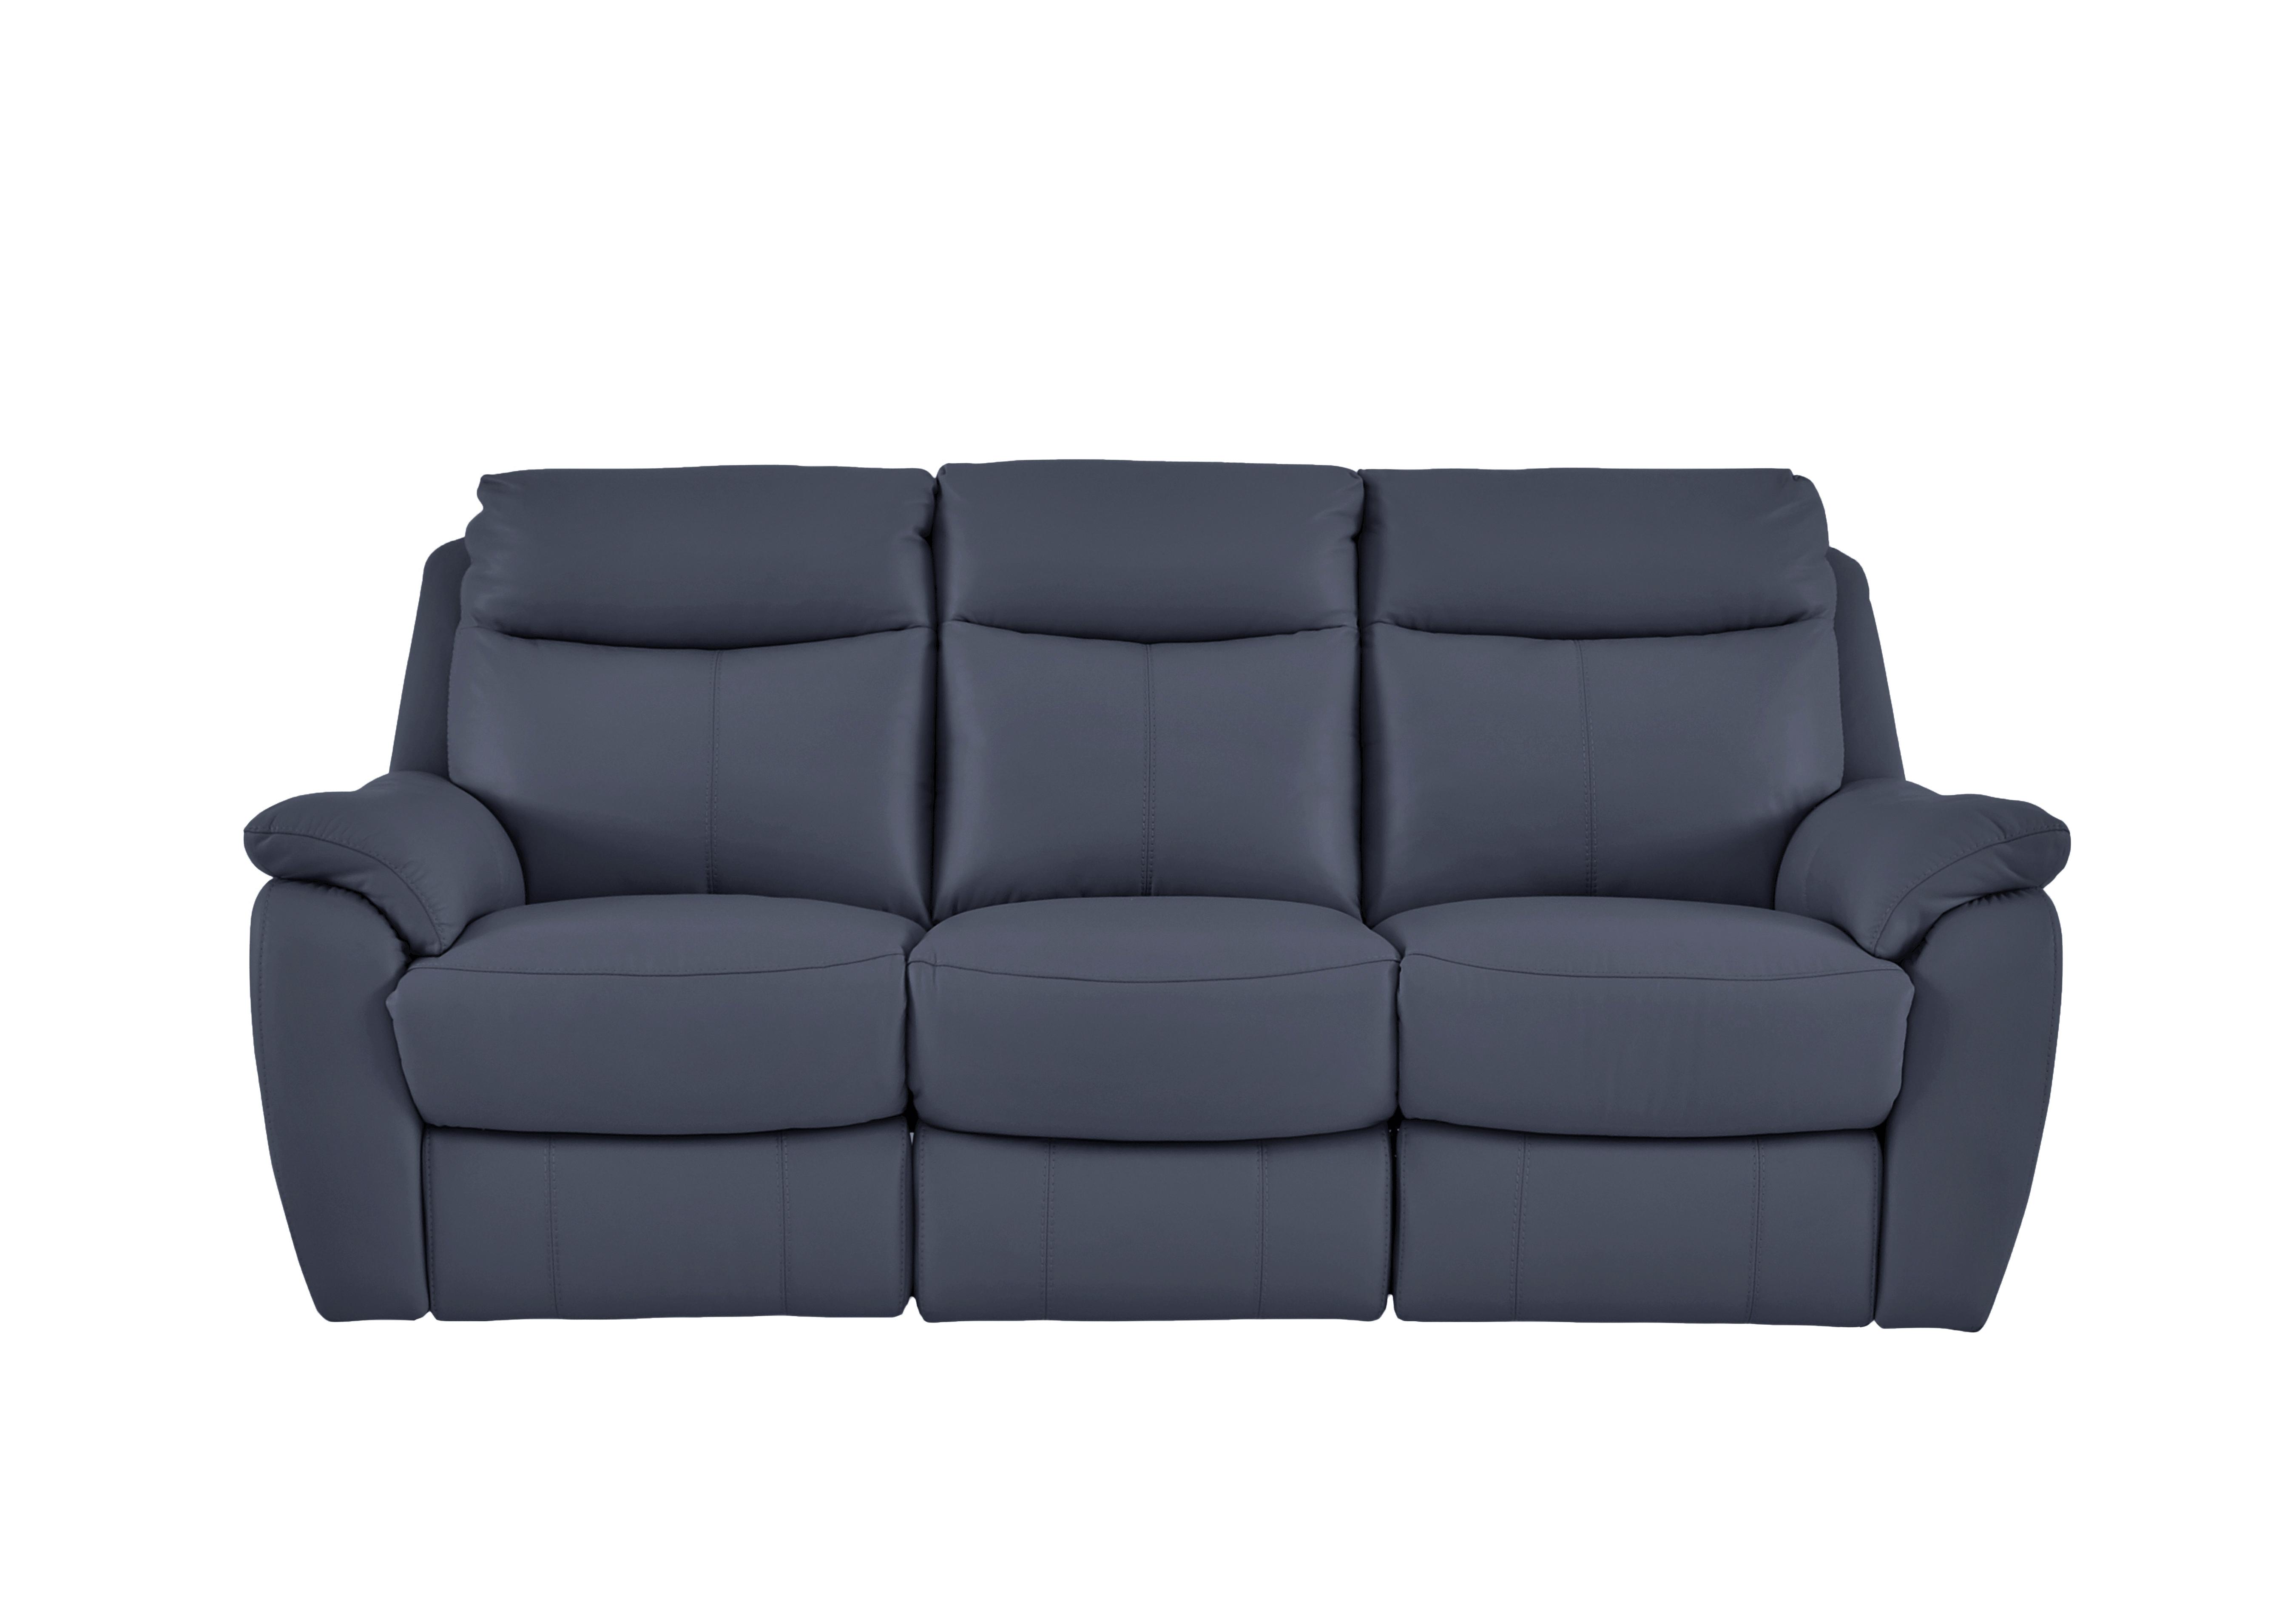 Snug 3 Seater Leather Sofa in Bv-313e Ocean Blue on Furniture Village